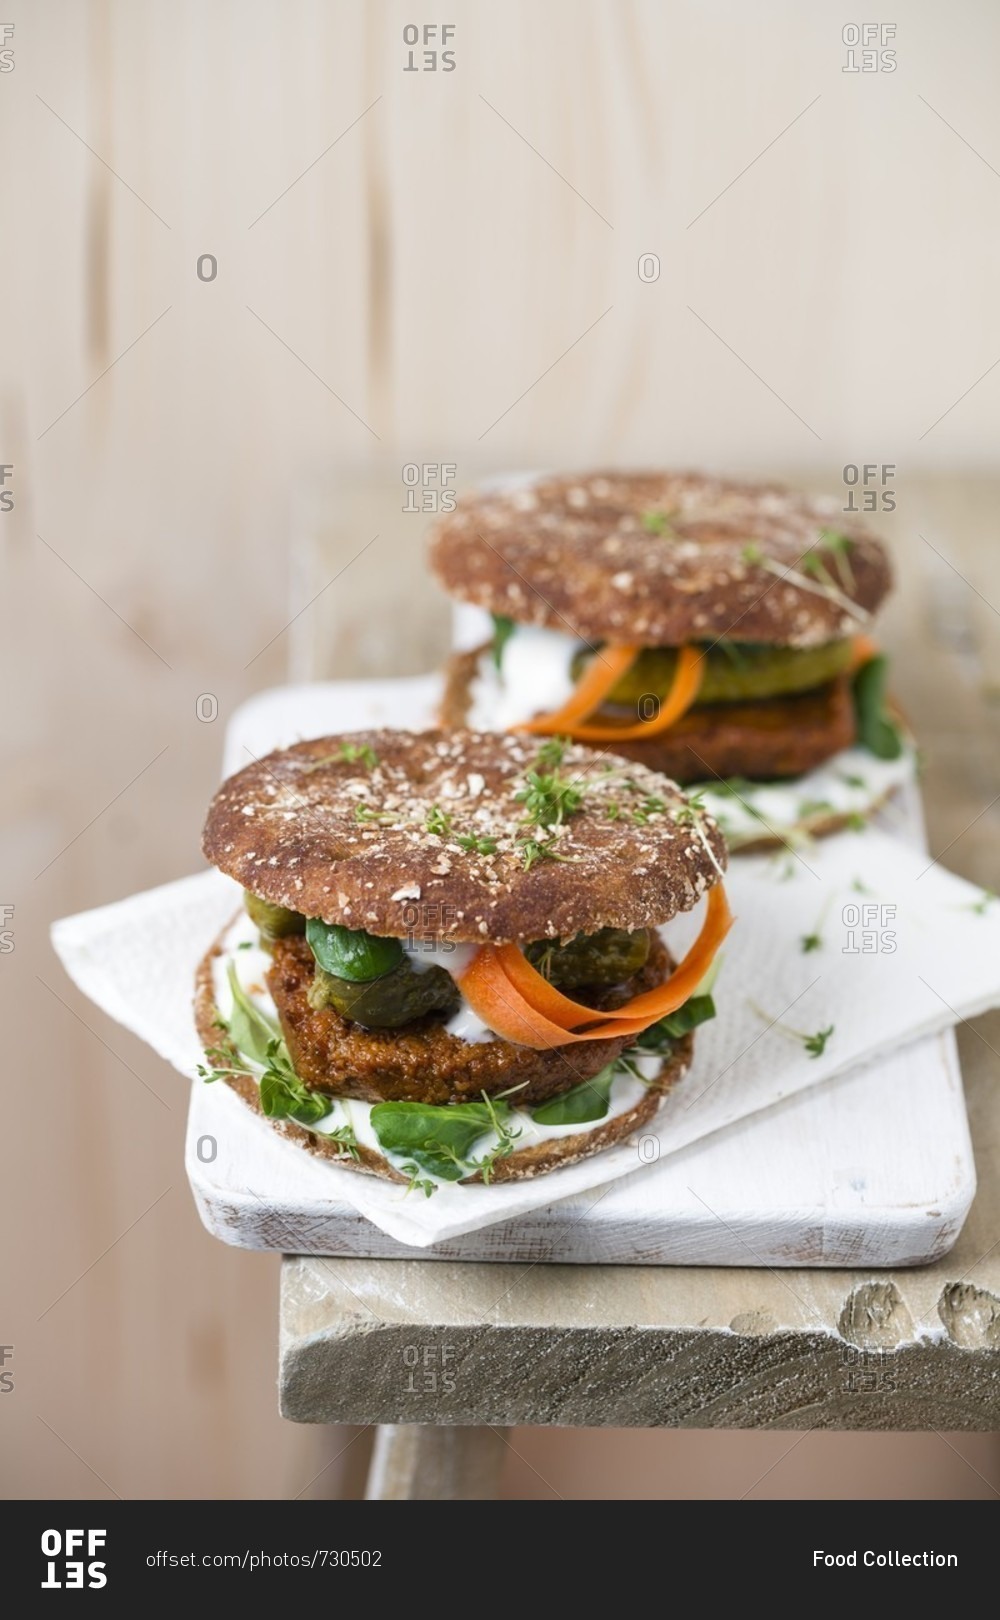 Vegan burger with tofu patty, gherkins, lamb's lettuce, carrot and cress